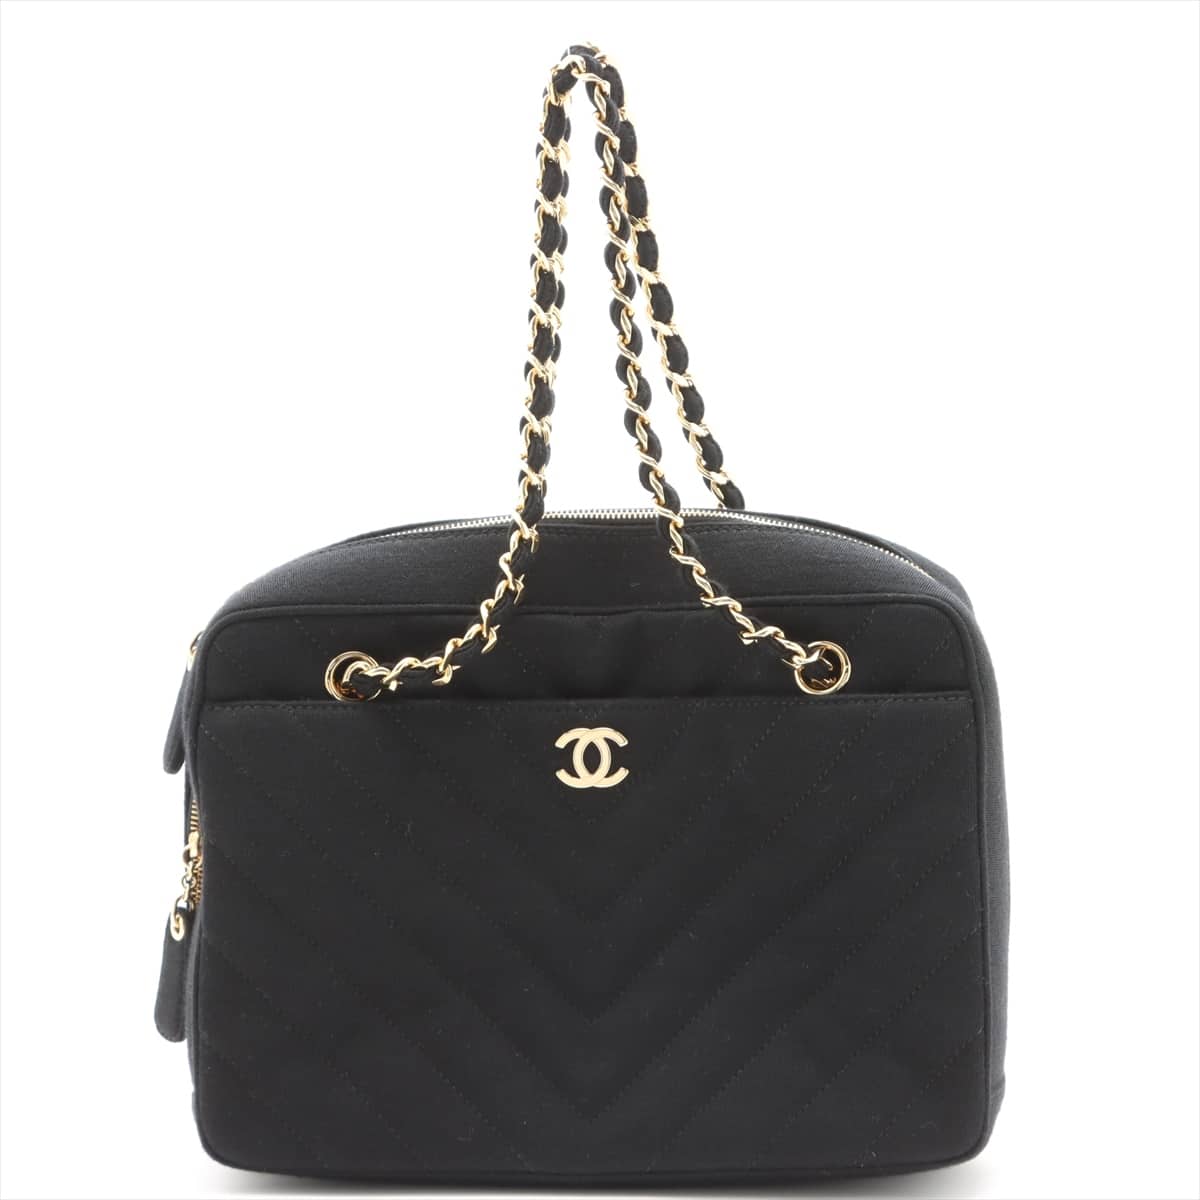 Chanel V Stitch Cotton Chain shoulder bag Black Gold Metal fittings 6XXXXXX Pouch shortage